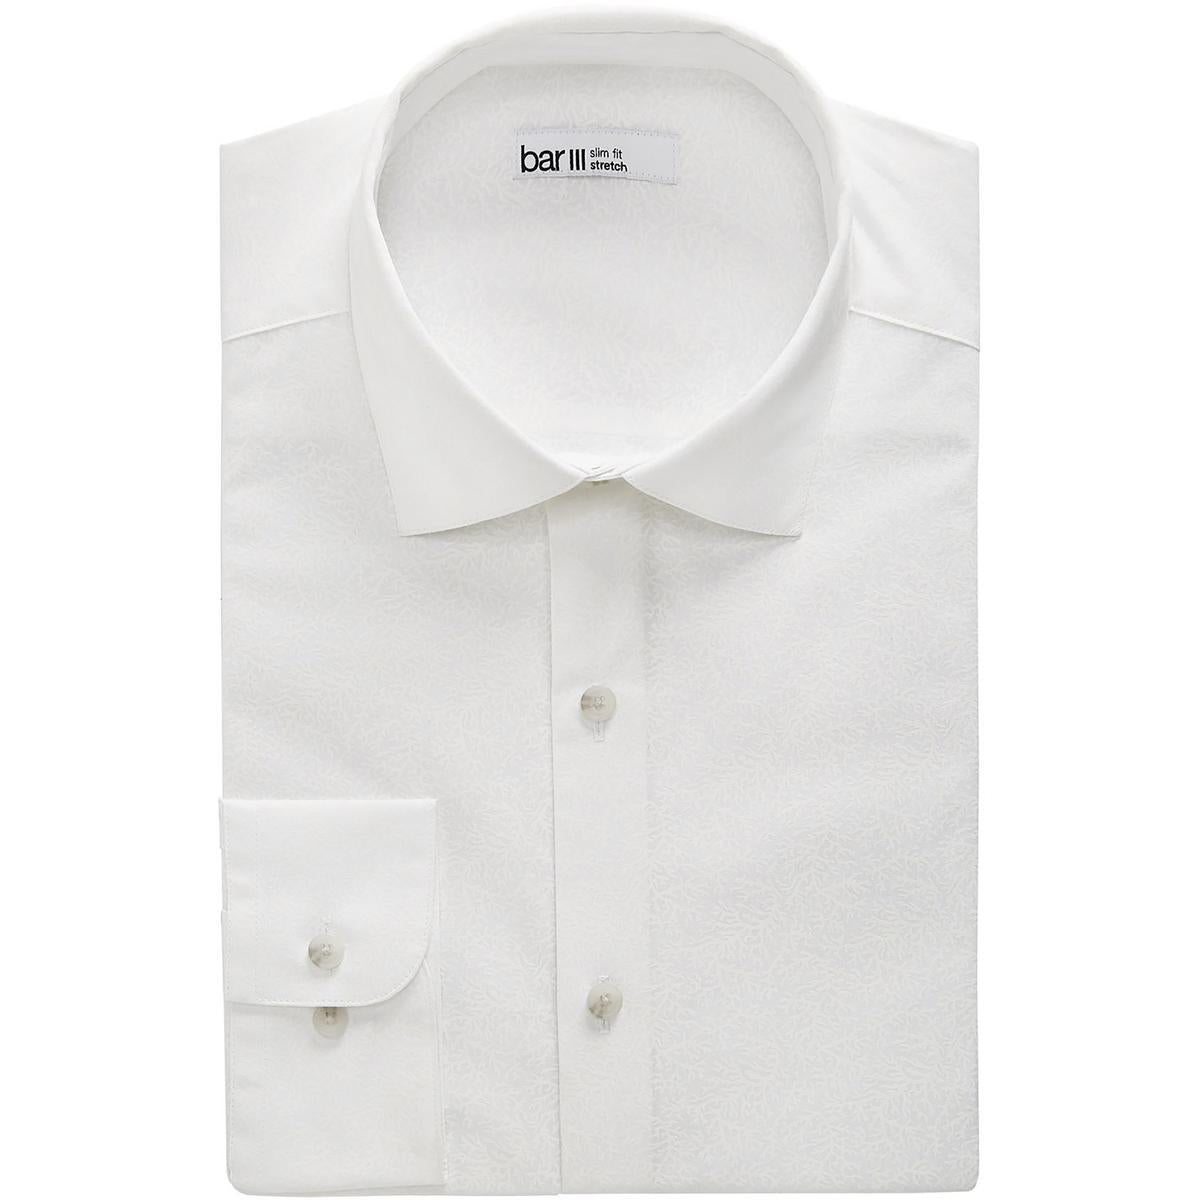 Michael Kors Men's Plaid Slim Fir Button Down Shirt Blue Size 14.5